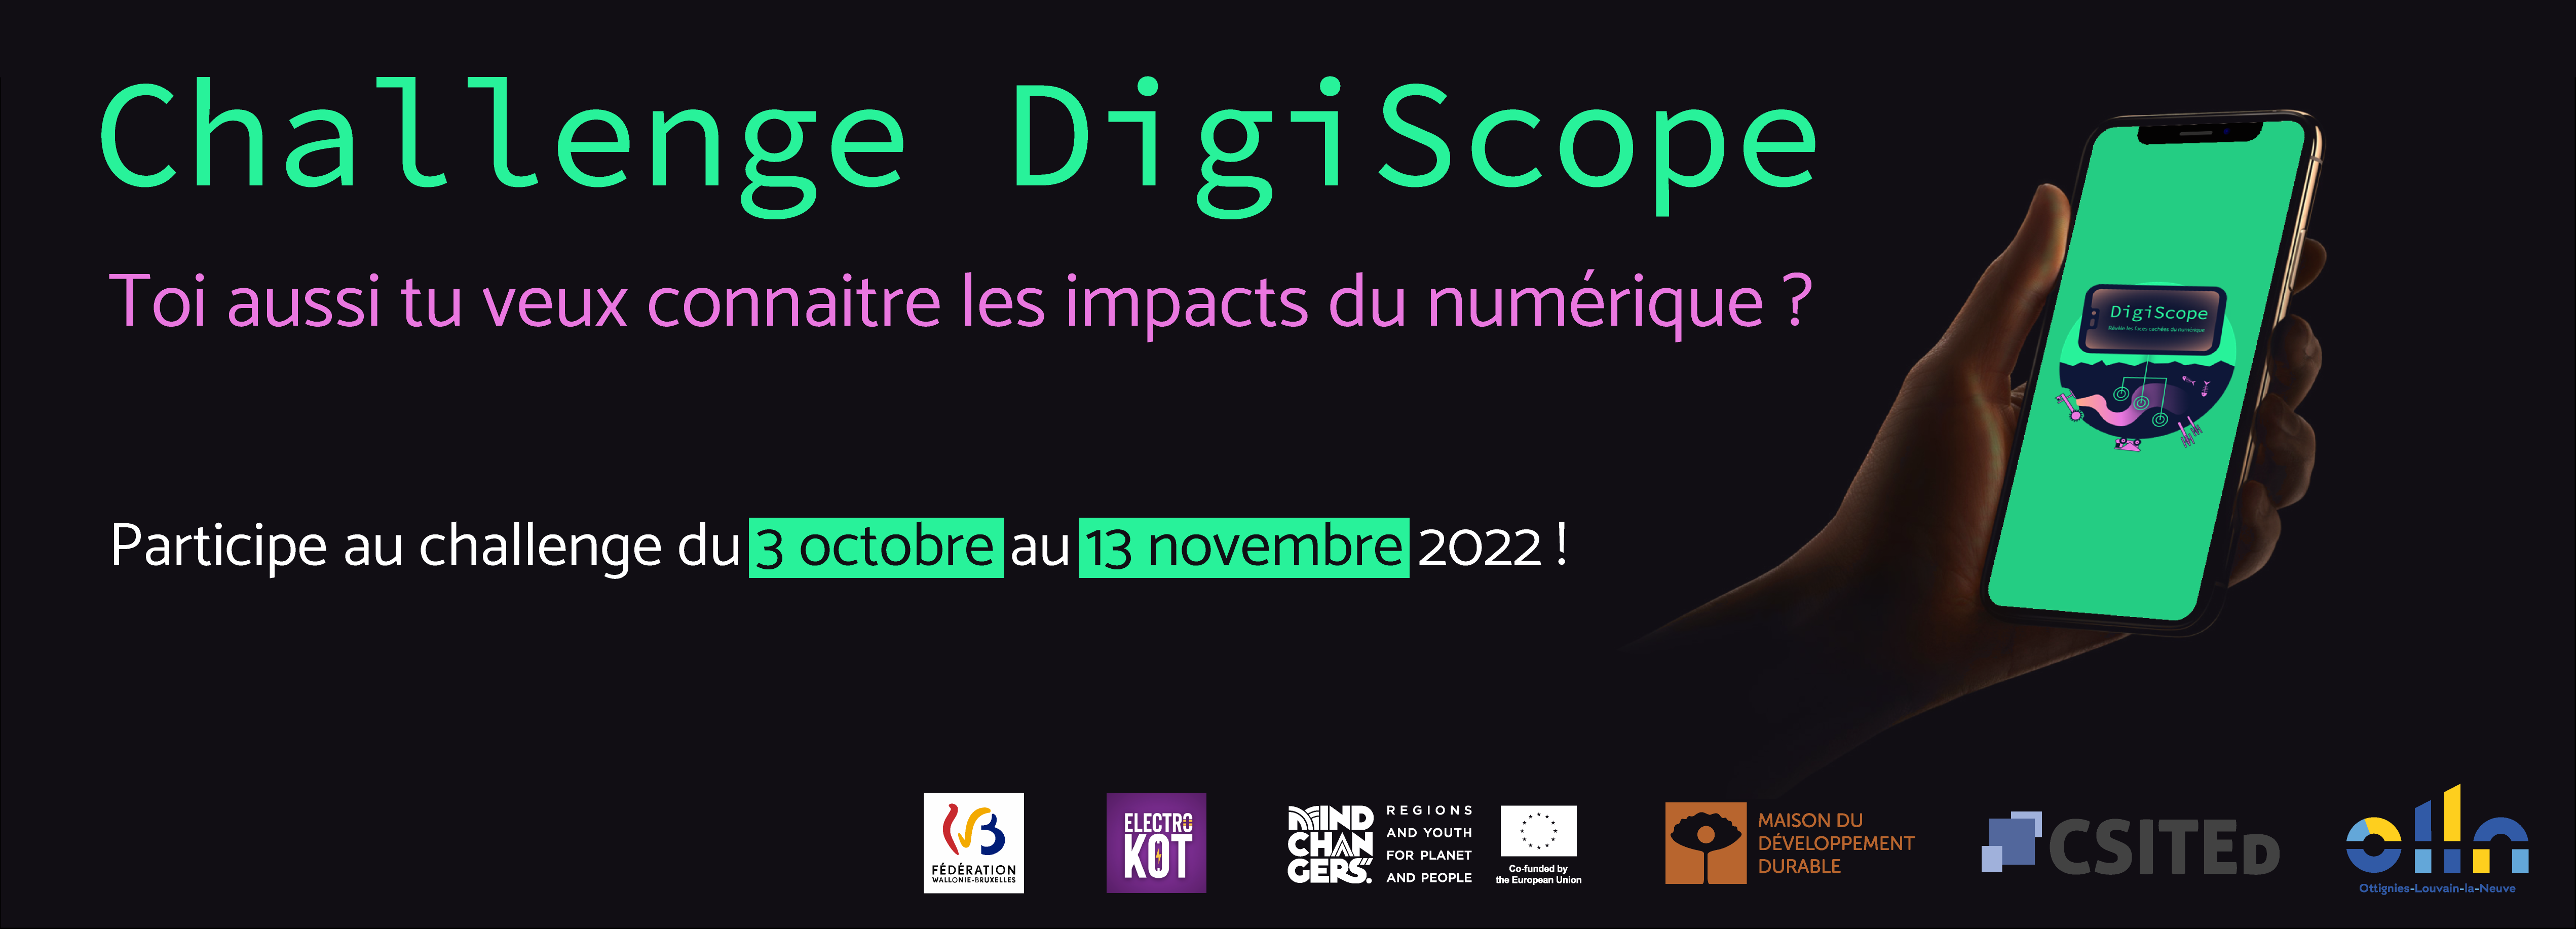 Challenge DigiScope 2022 banner